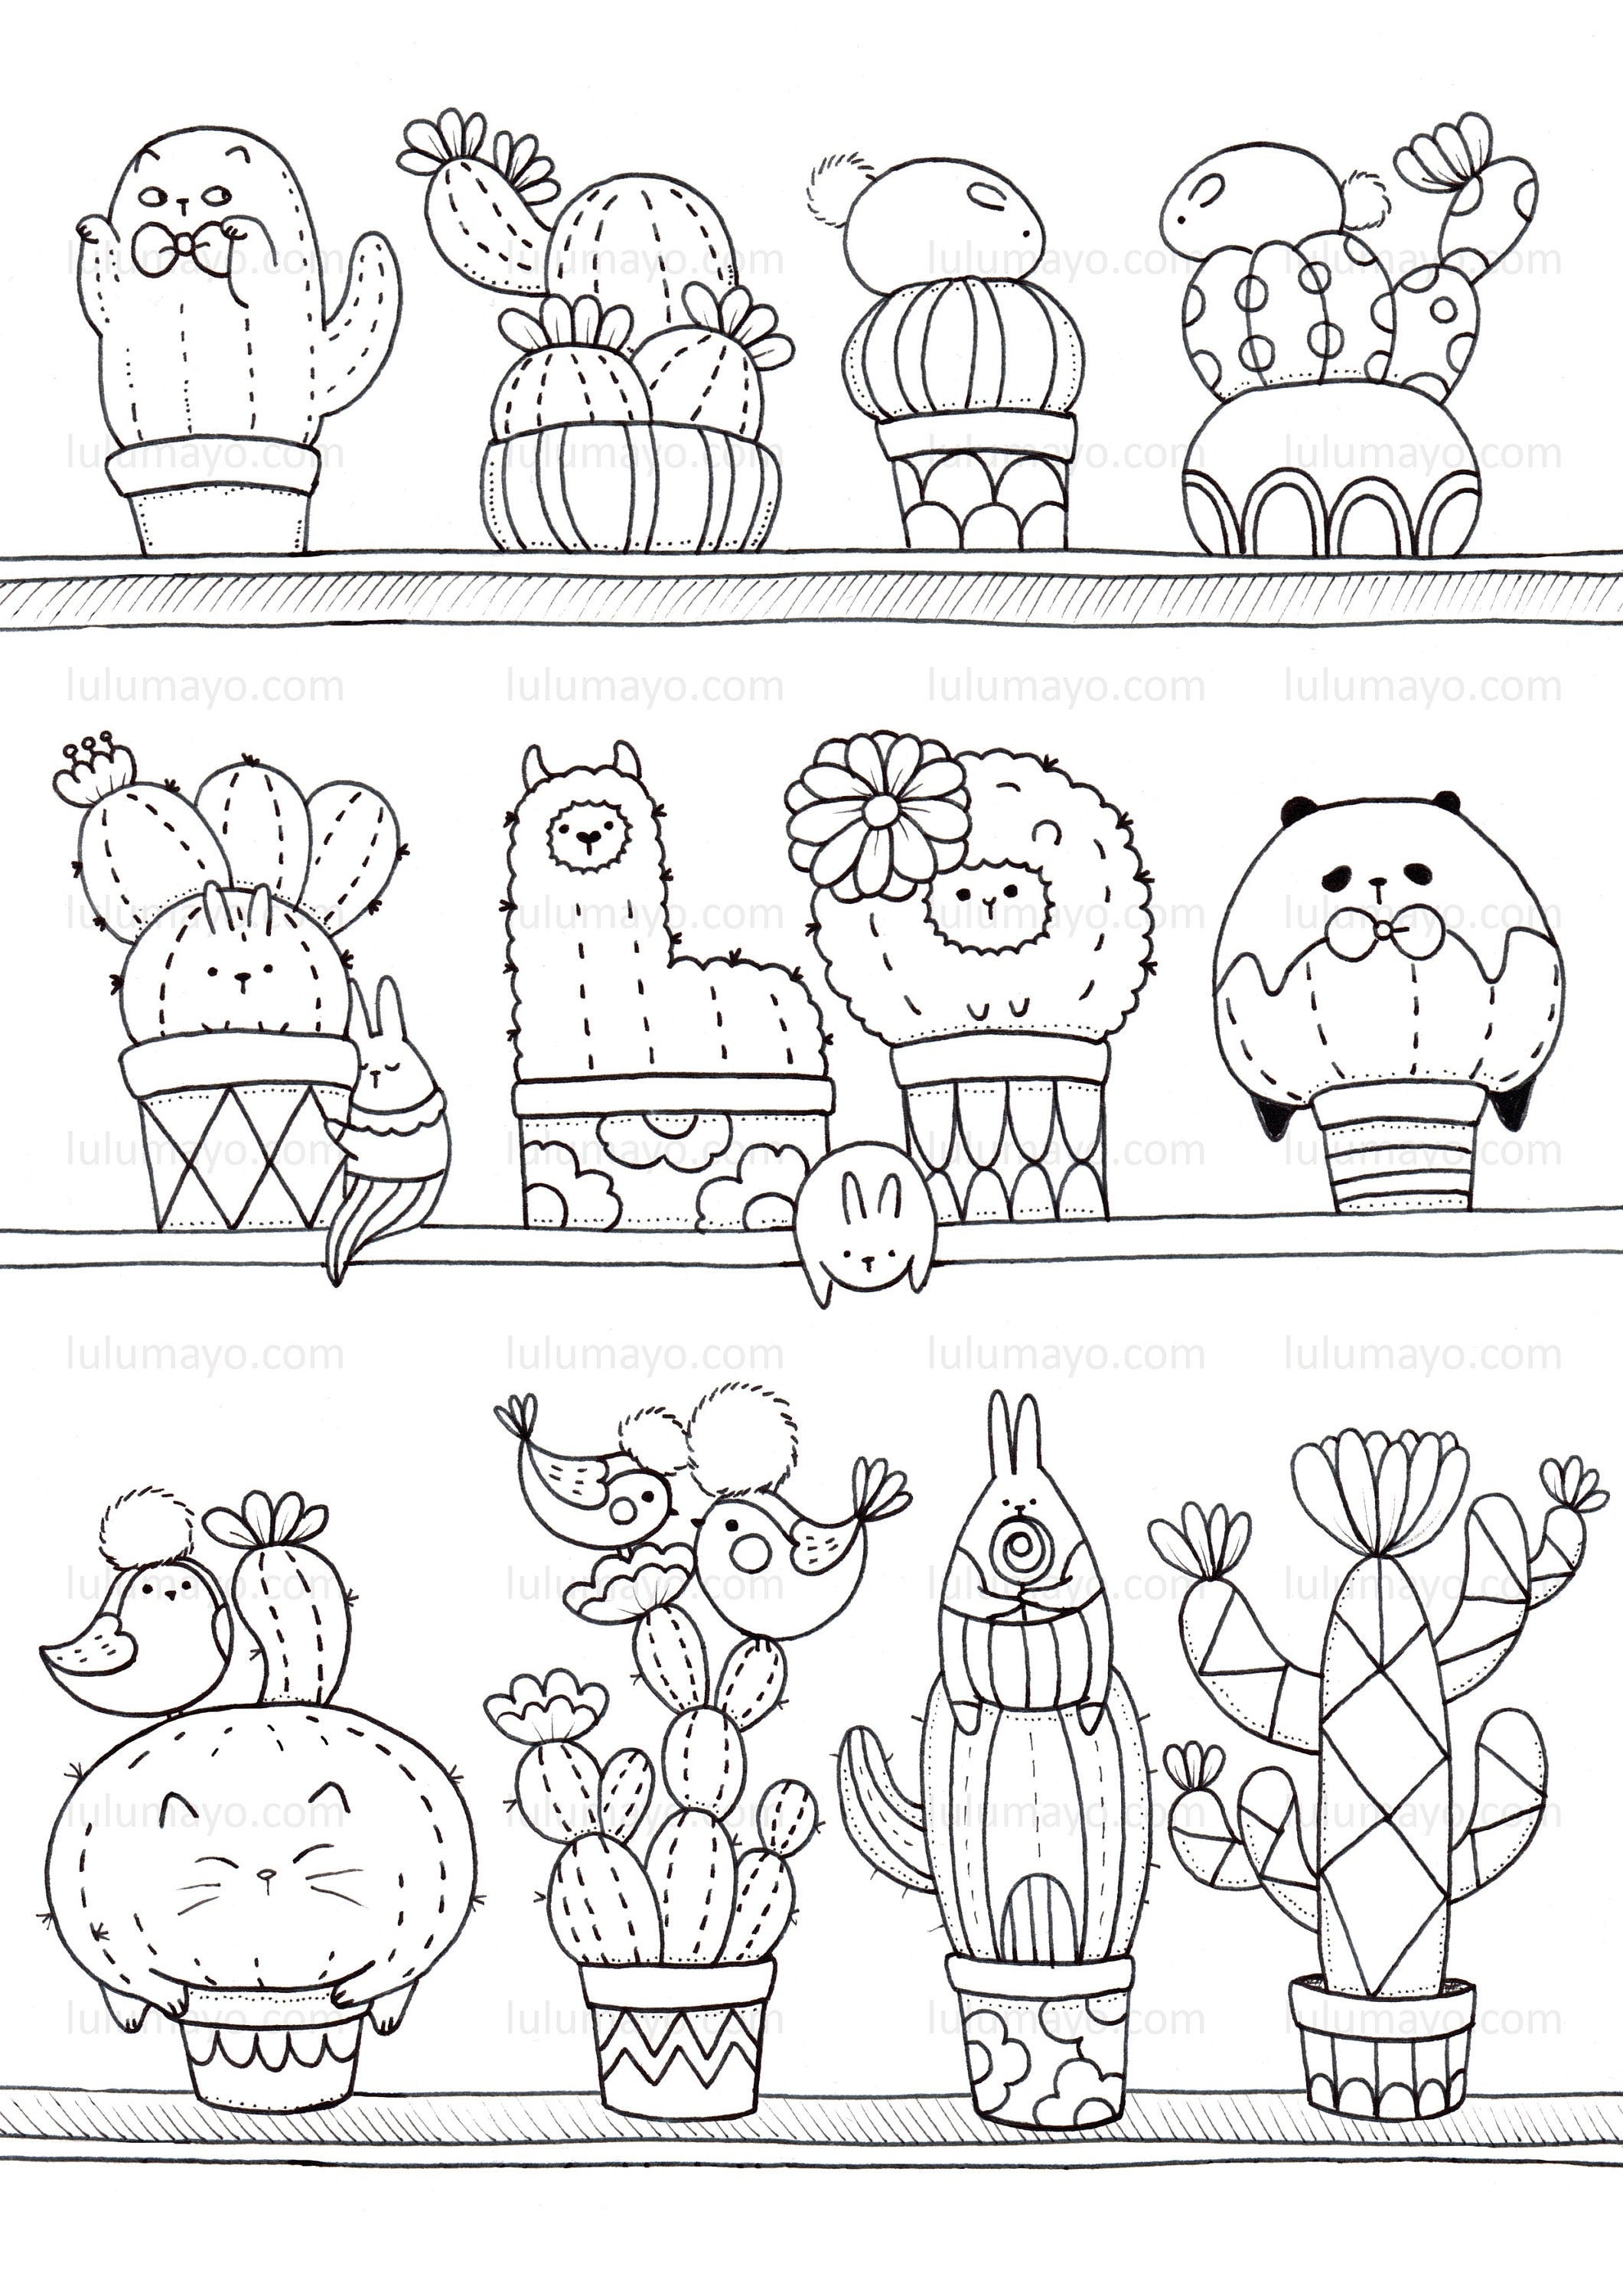 Super cute animal cactus llama cat bird bear rabbit plant coloring page lulu mayo instant digital download